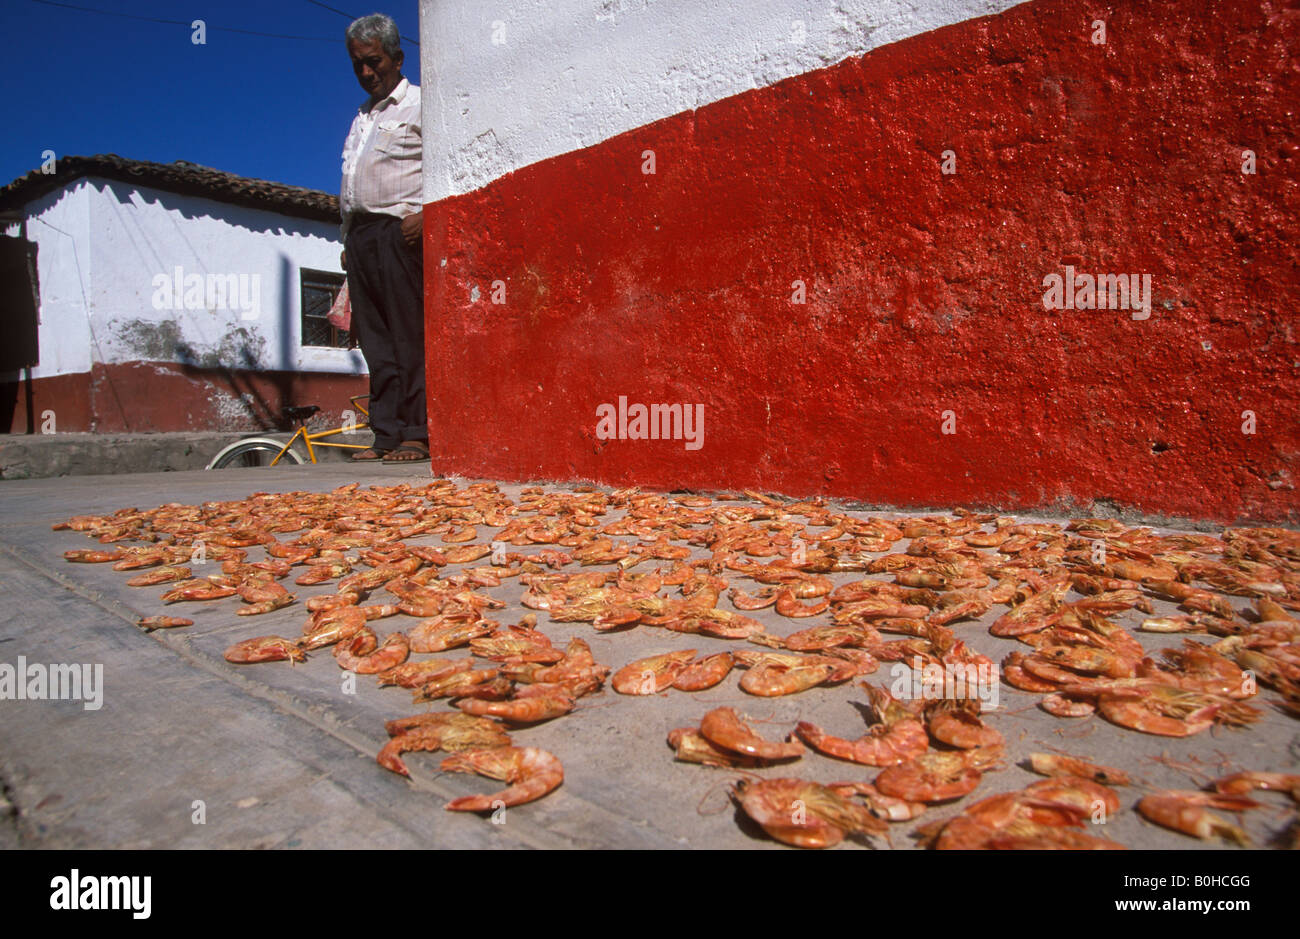 Camarones, Krabben angelegt, trocken, Mexcaltitan Insel, Nayarit, Mexiko Stockfoto